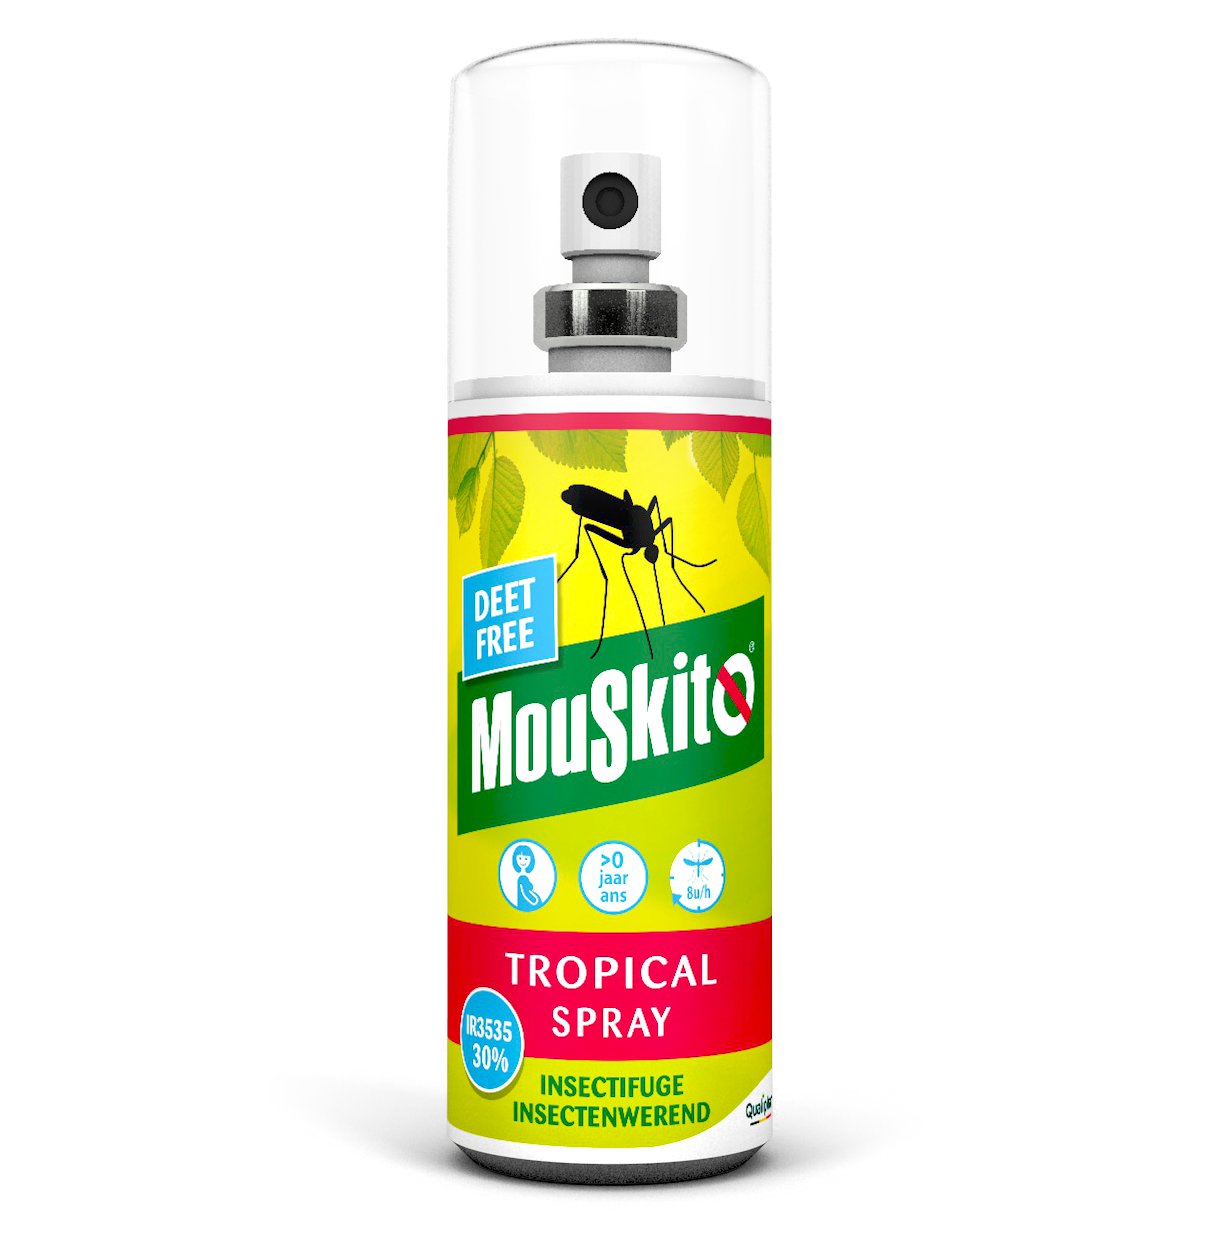 Mouskito® Tropical DEET Free Spray